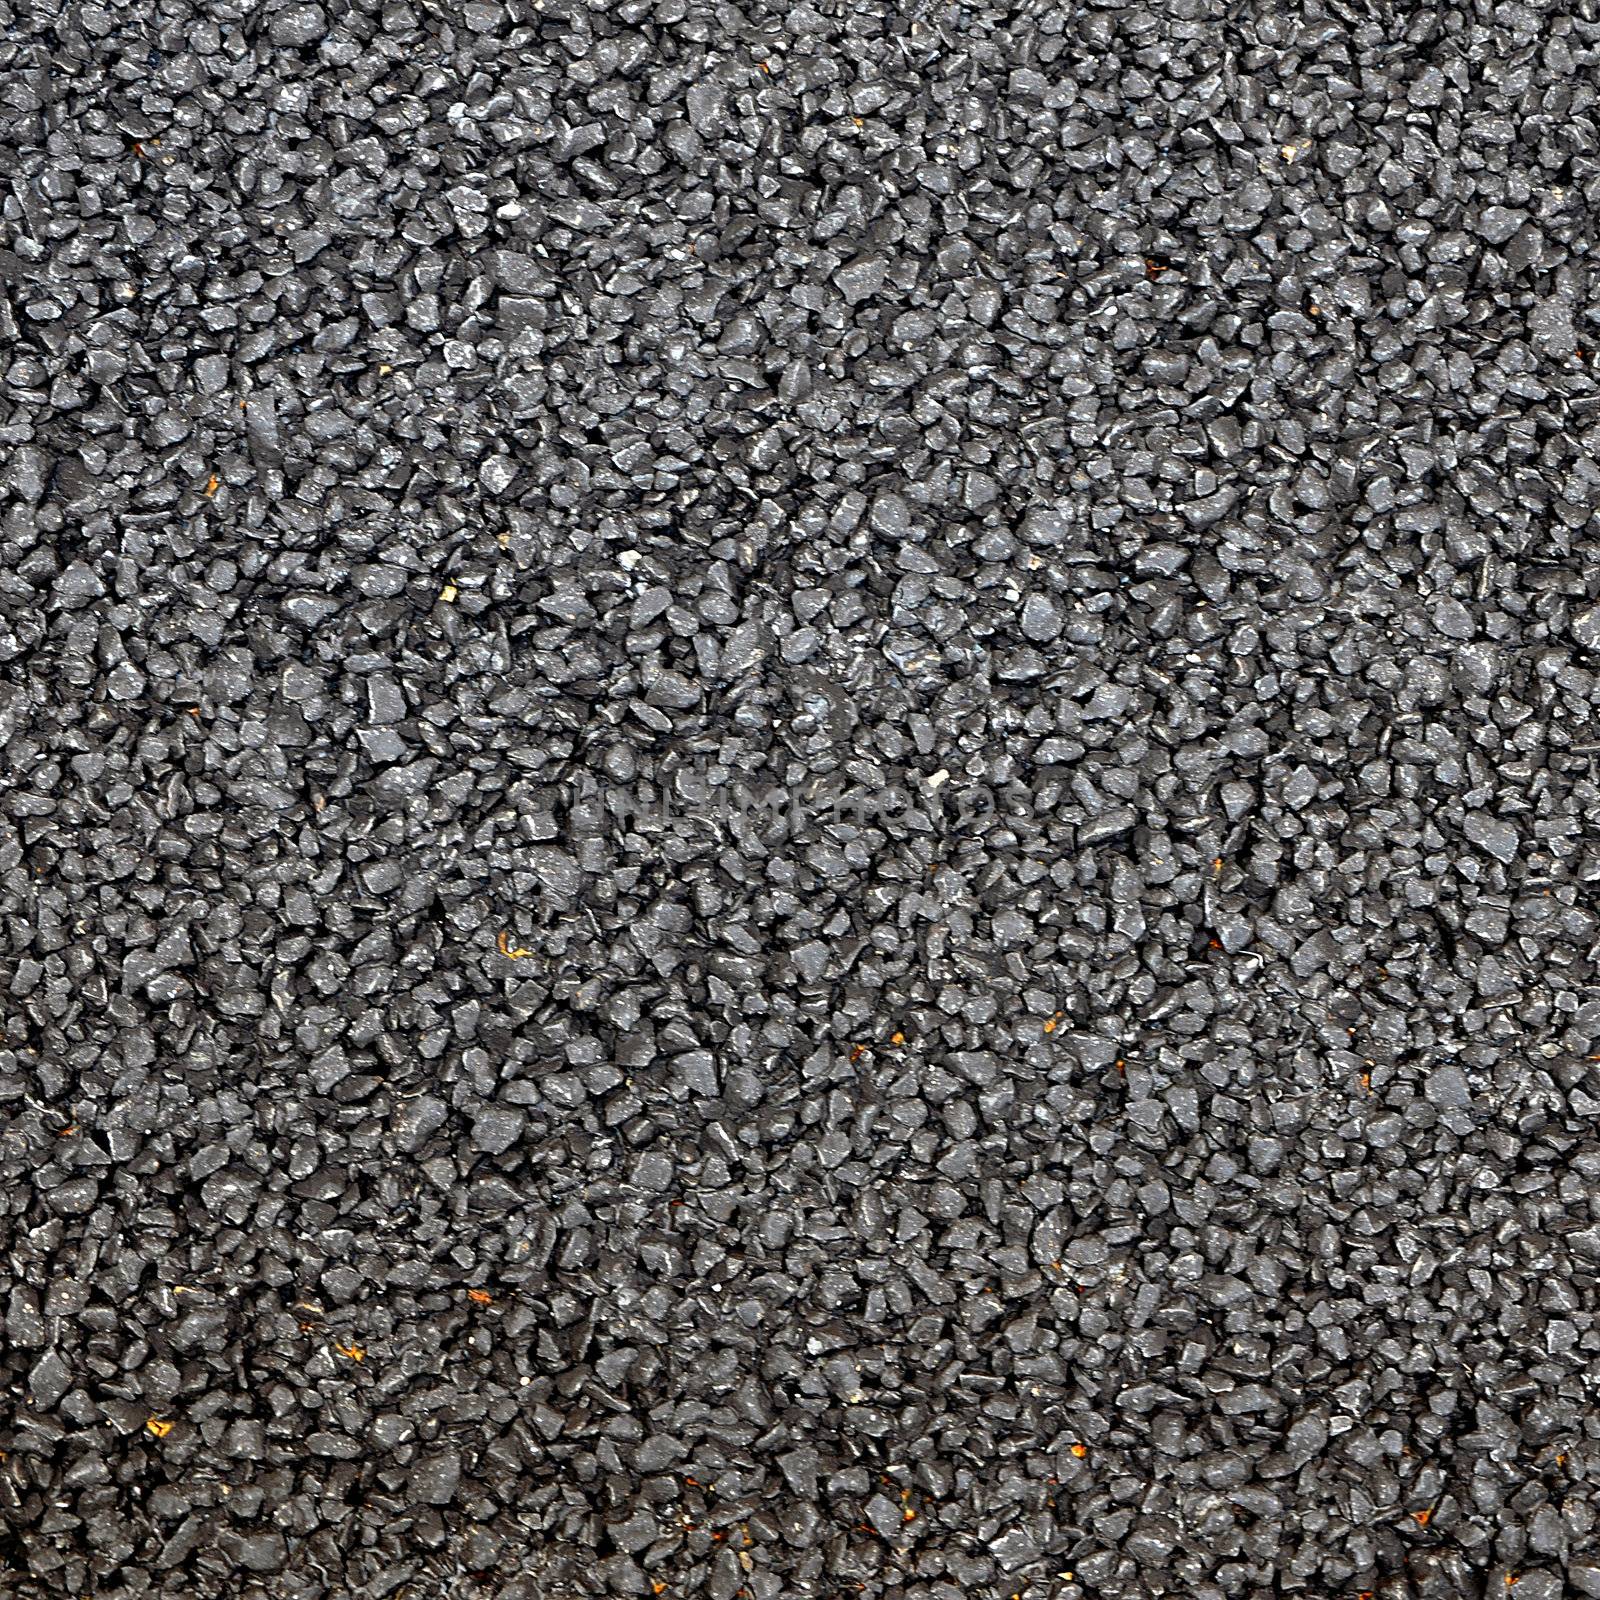 Closeup of the black tar surface of an asphalt road by siraanamwong